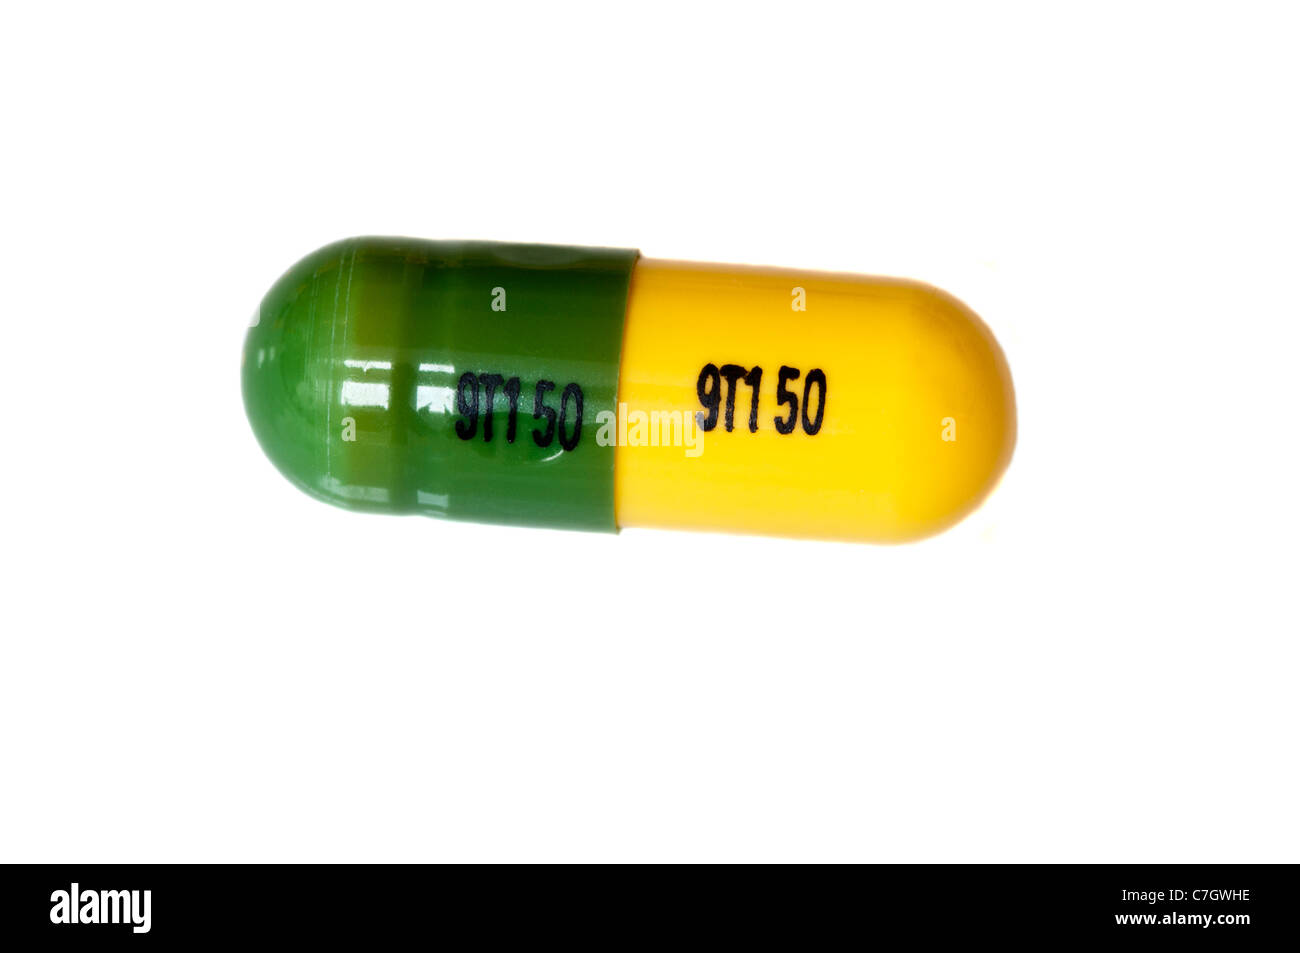 Tramadol Hydrochloride 50mg Capsule prescription drug Stock Photo - Alamy